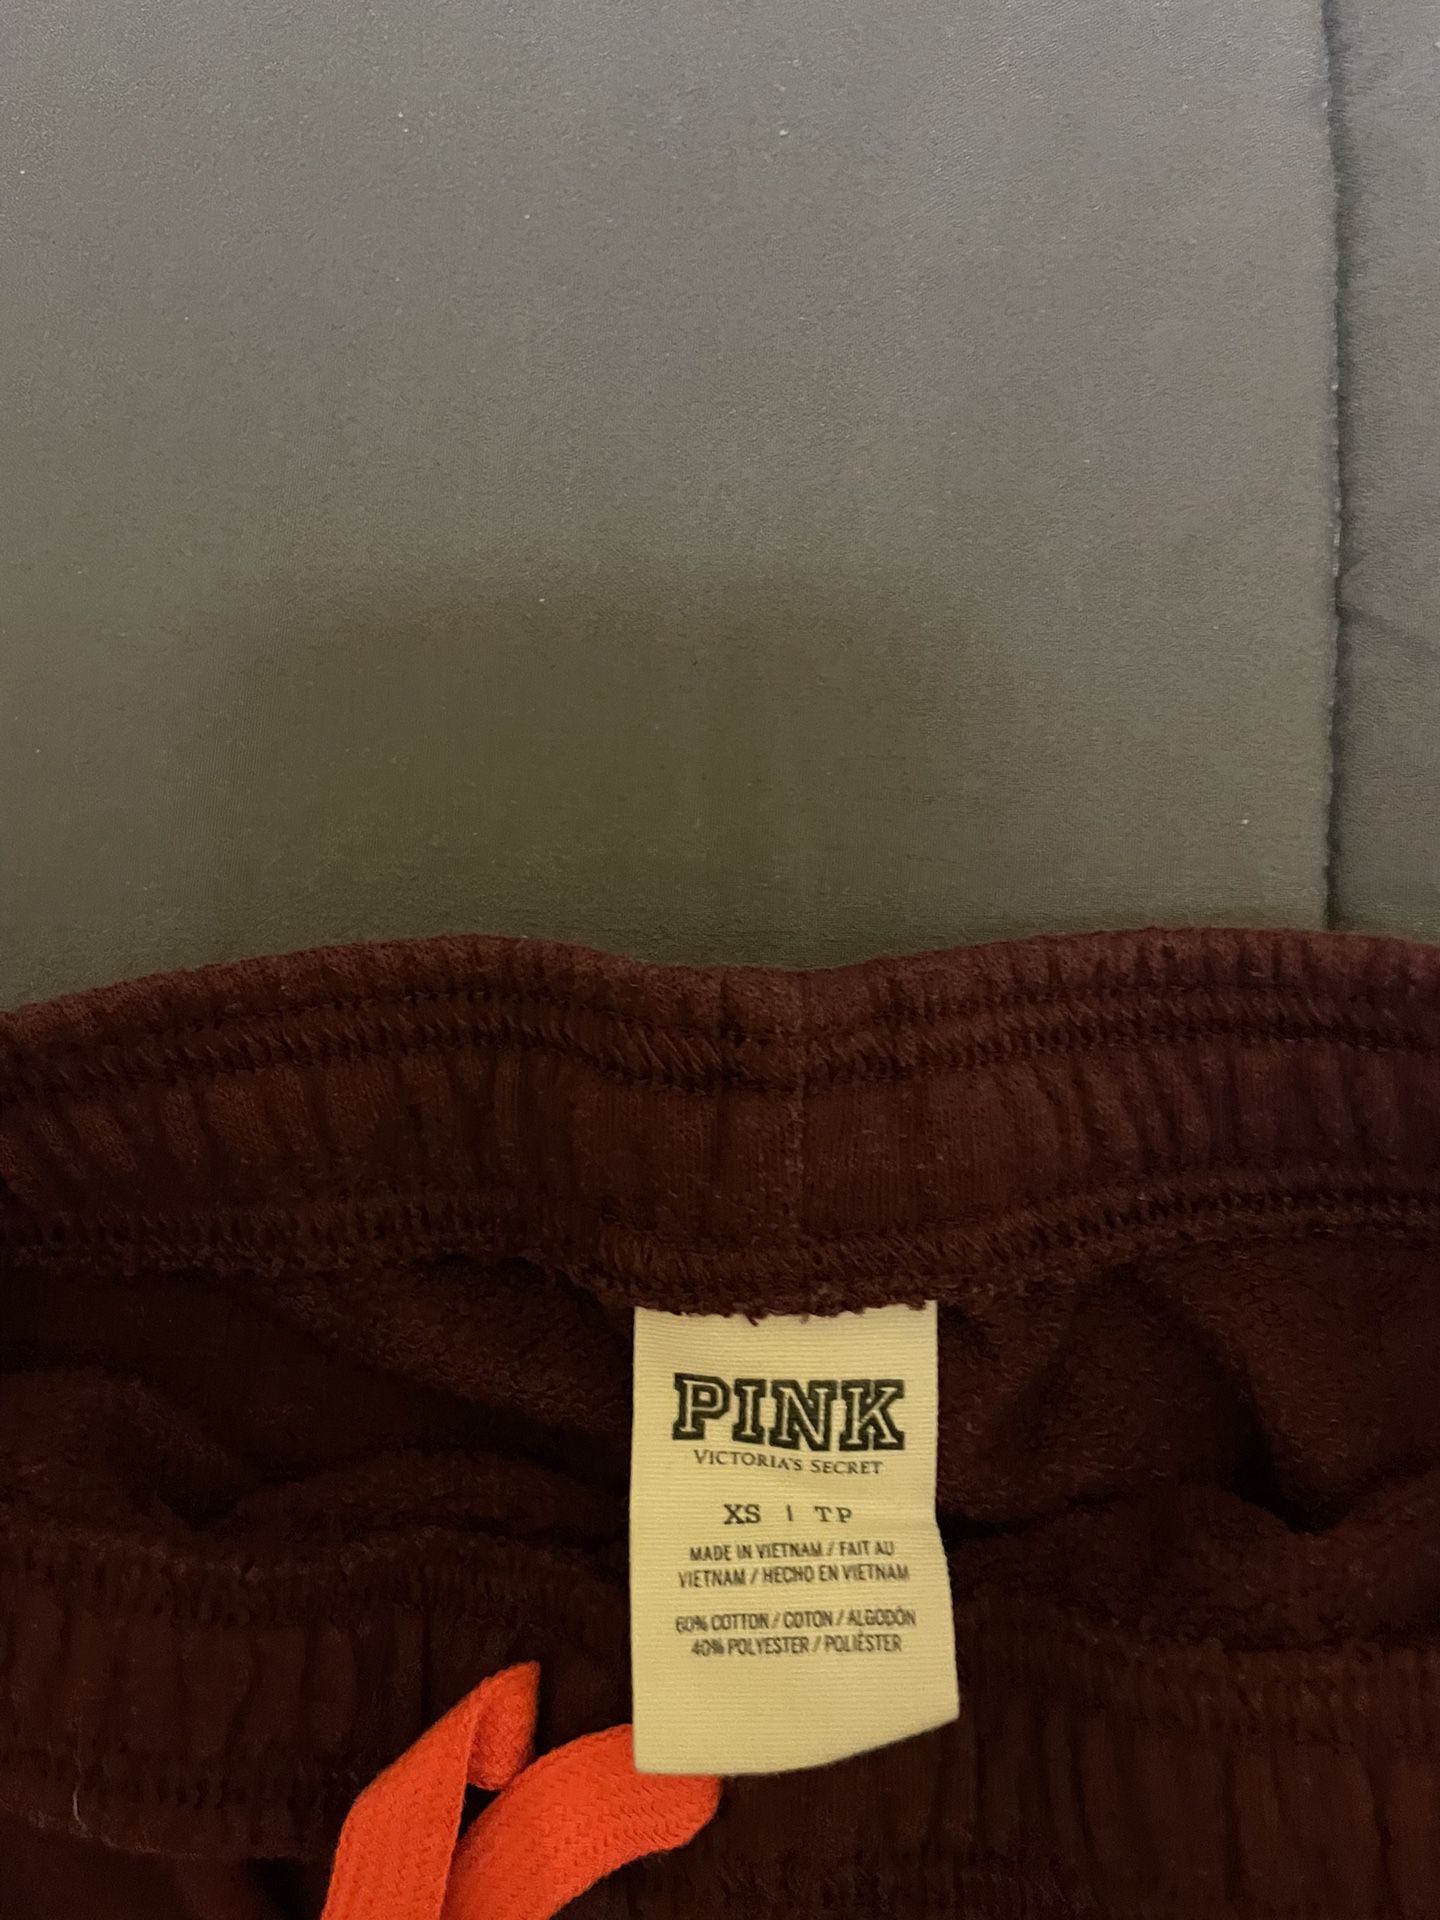 Pink Victoria Secret Sweatsuit XS for Sale in Paramus, NJ - OfferUp